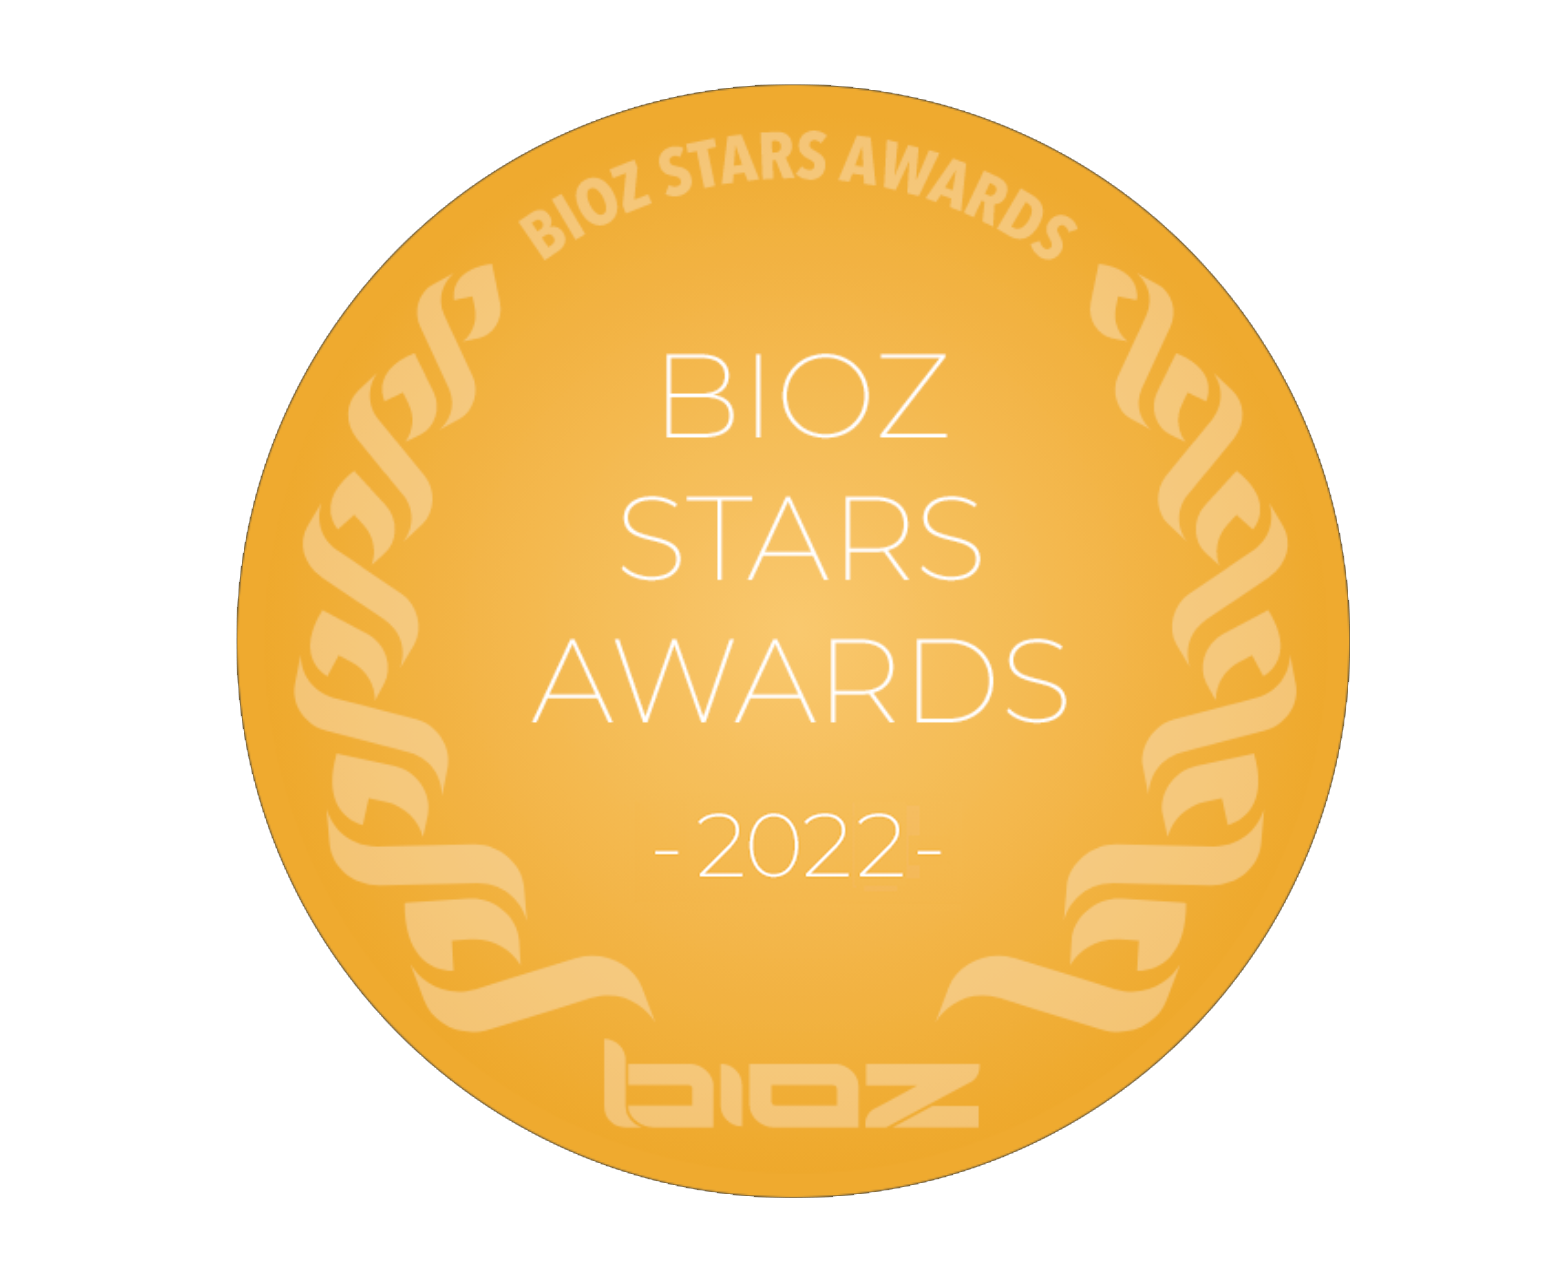 Bioz awards main image round 22